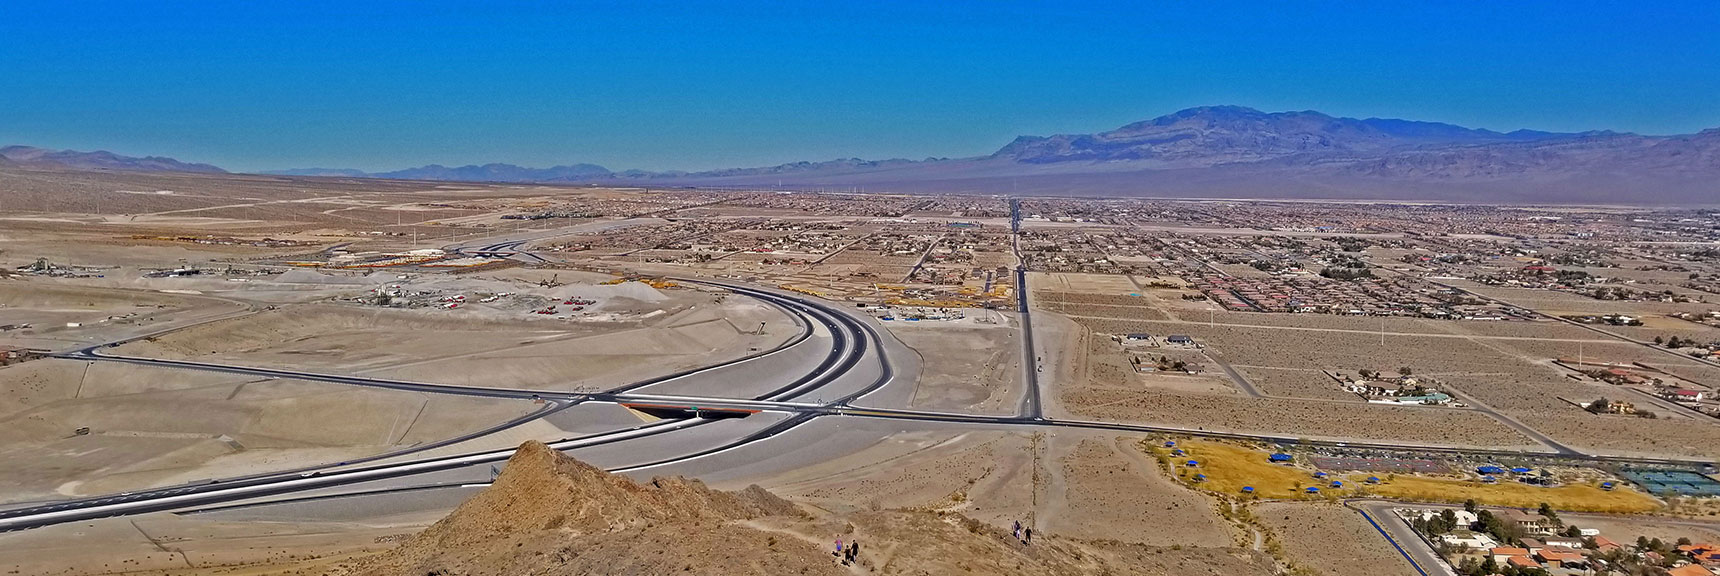 360 Summit View: I-215 with Sheep Range Backdrop | Lone Mountain | Las Vegas, Nevada